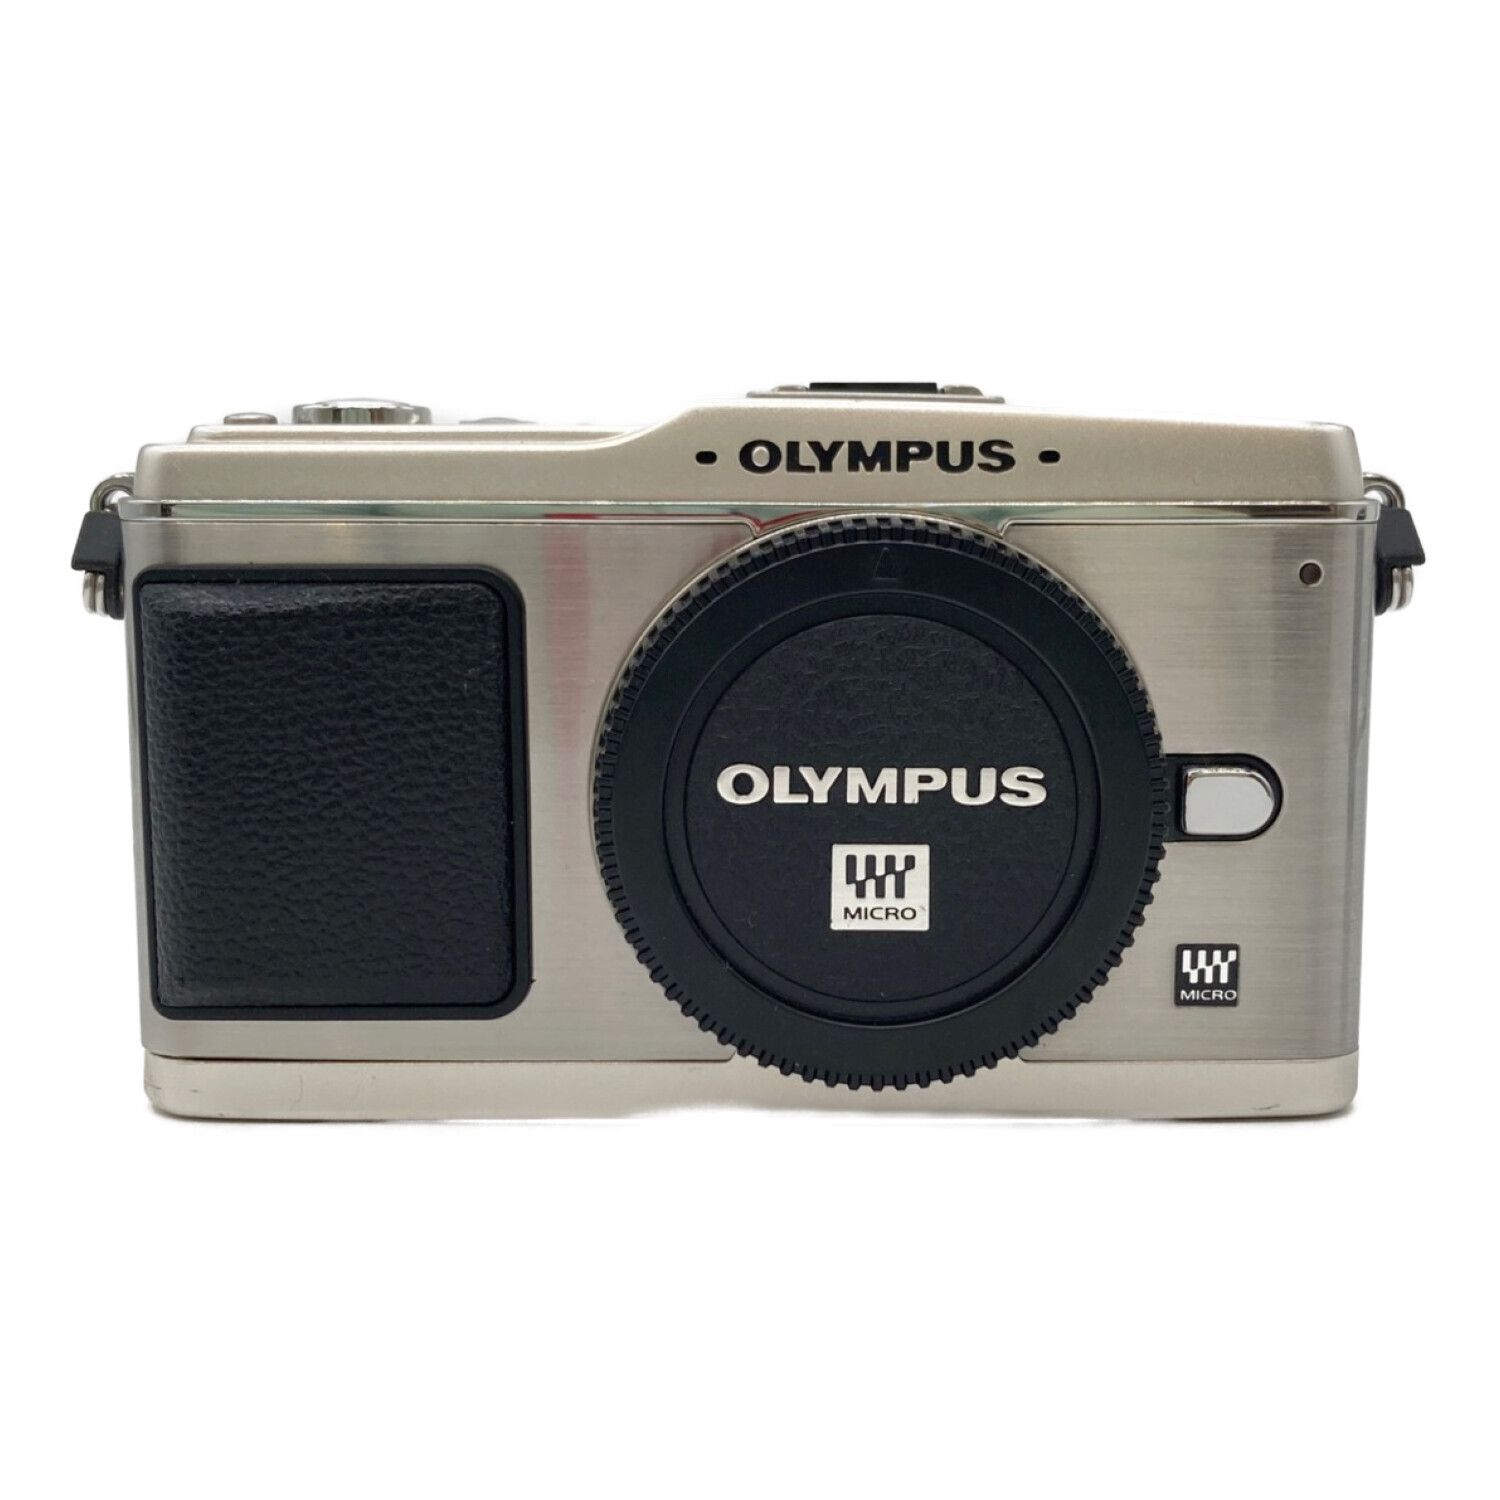 OLYMPUS (オリンパス) ミラーレス一眼レフカメラ E-P1 1310万画素